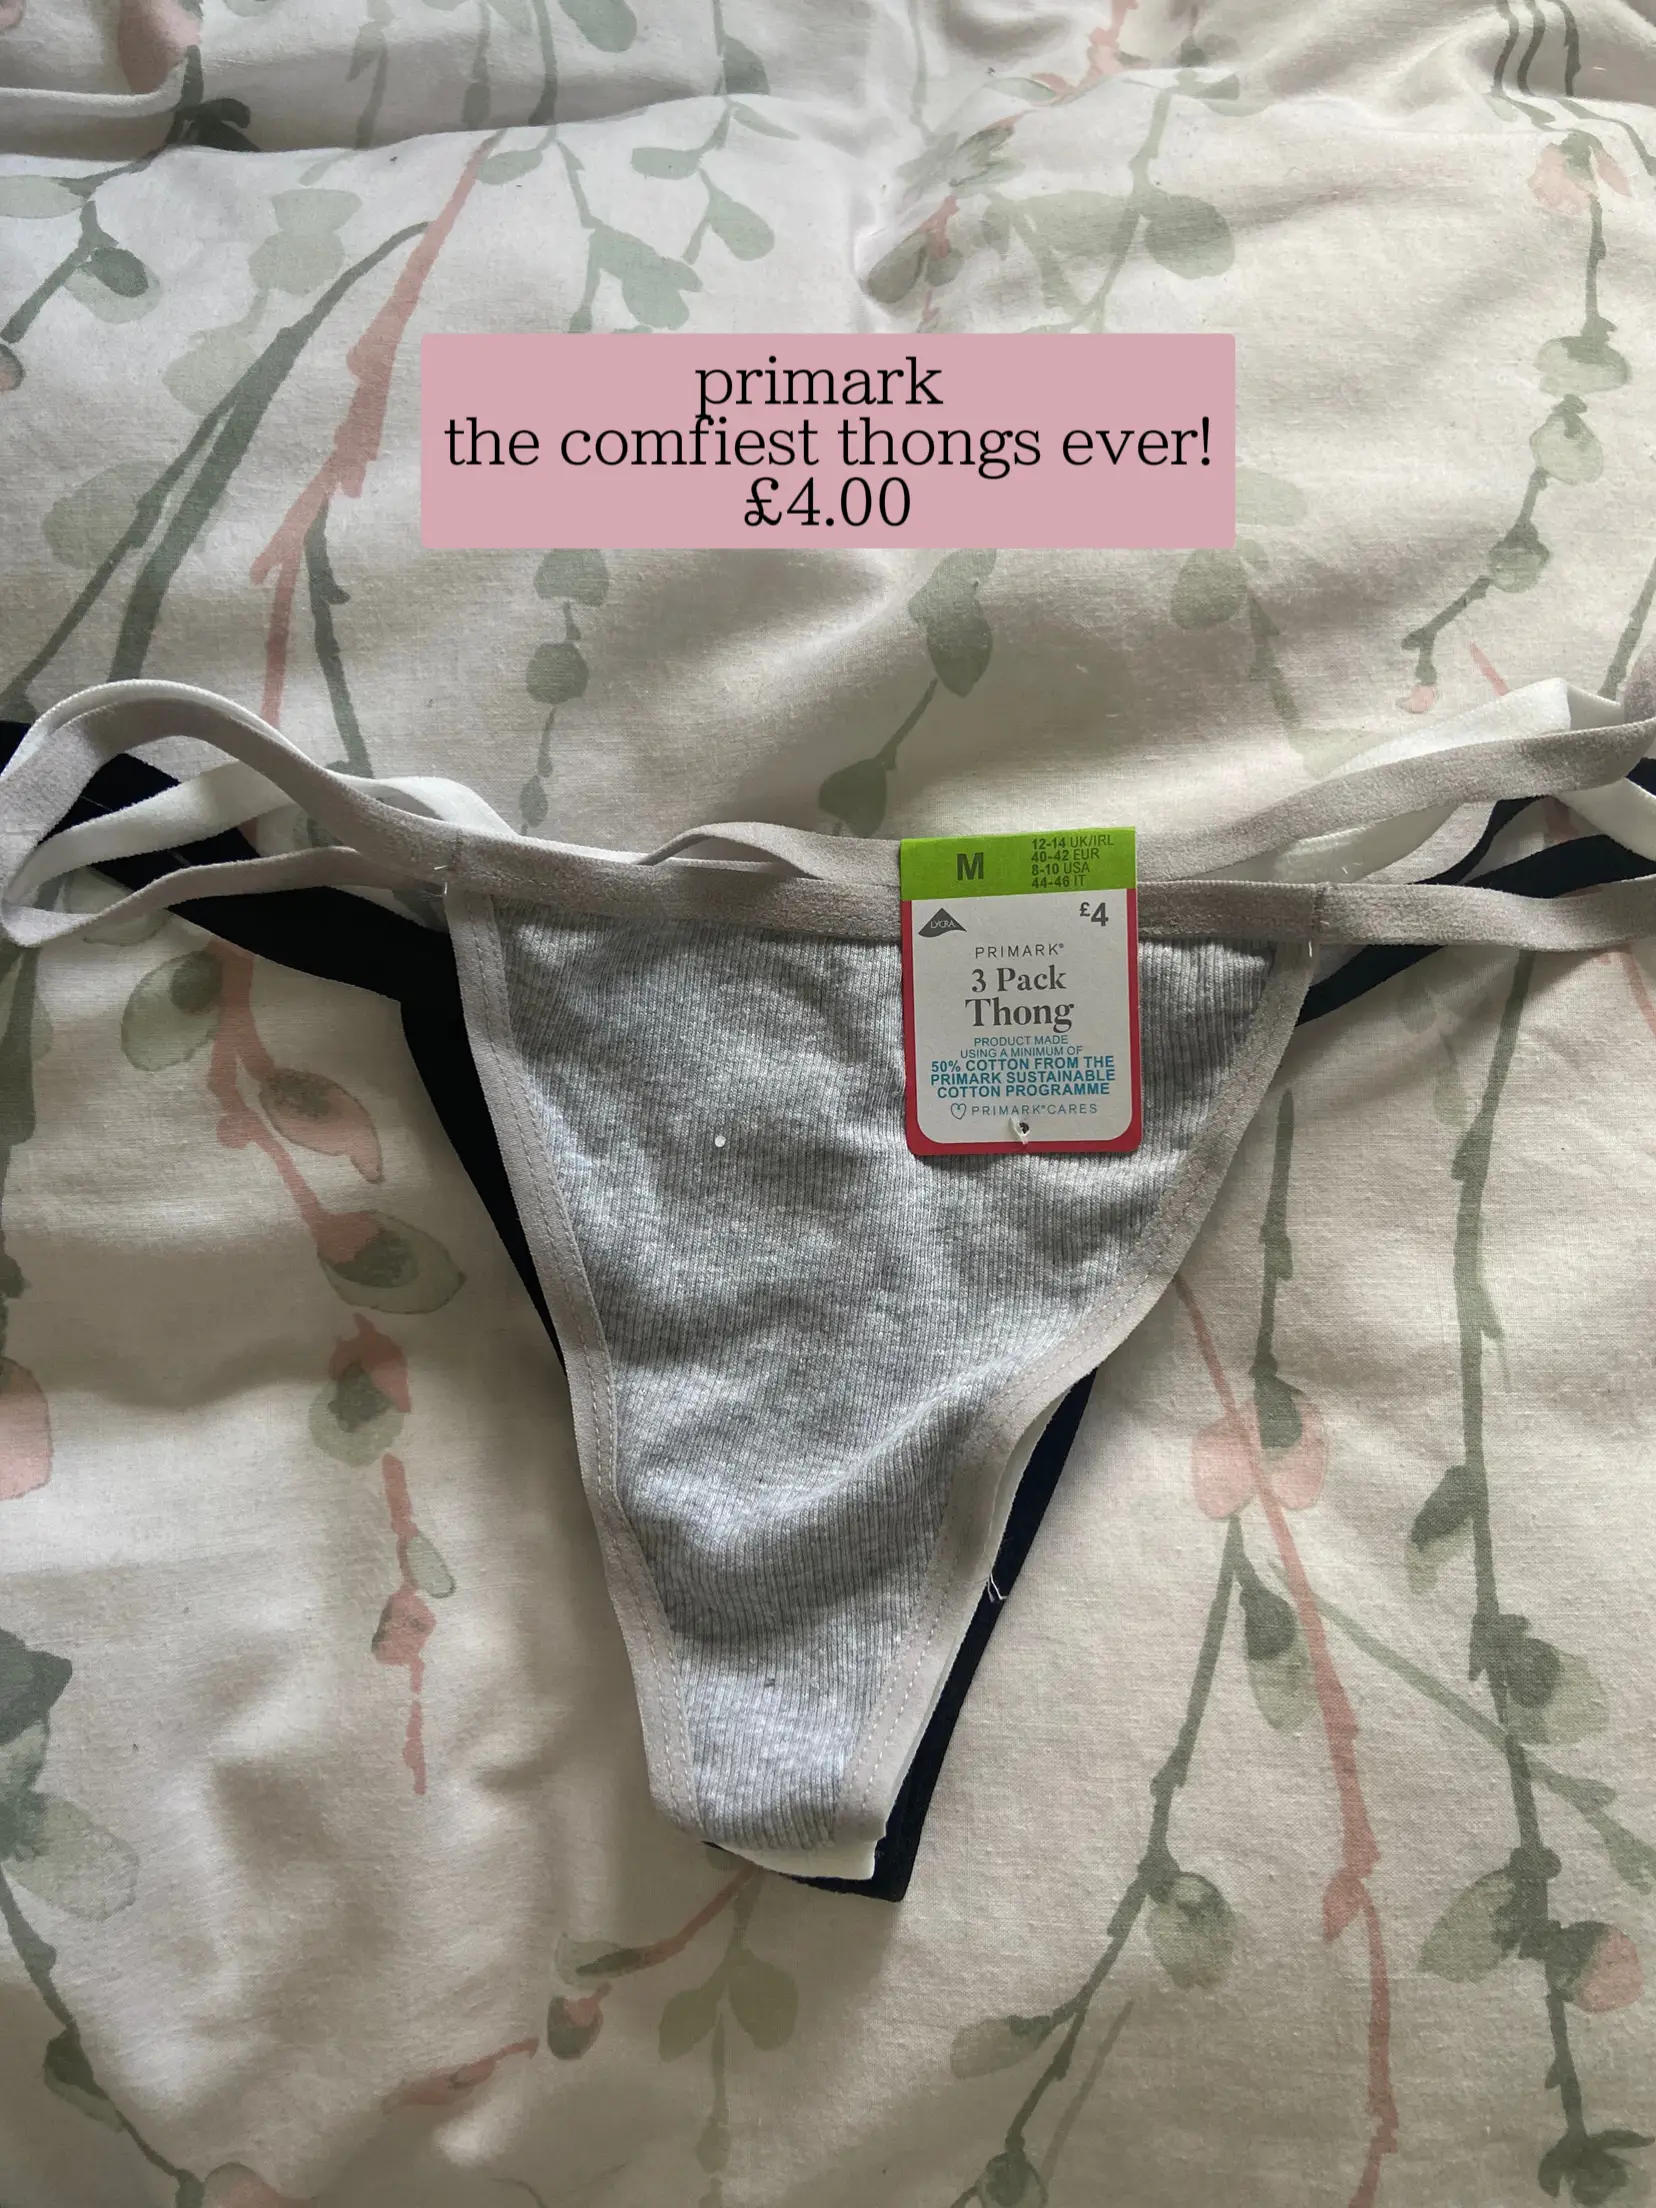 Living for this underwear atm 😍 #primark #primarkfinds